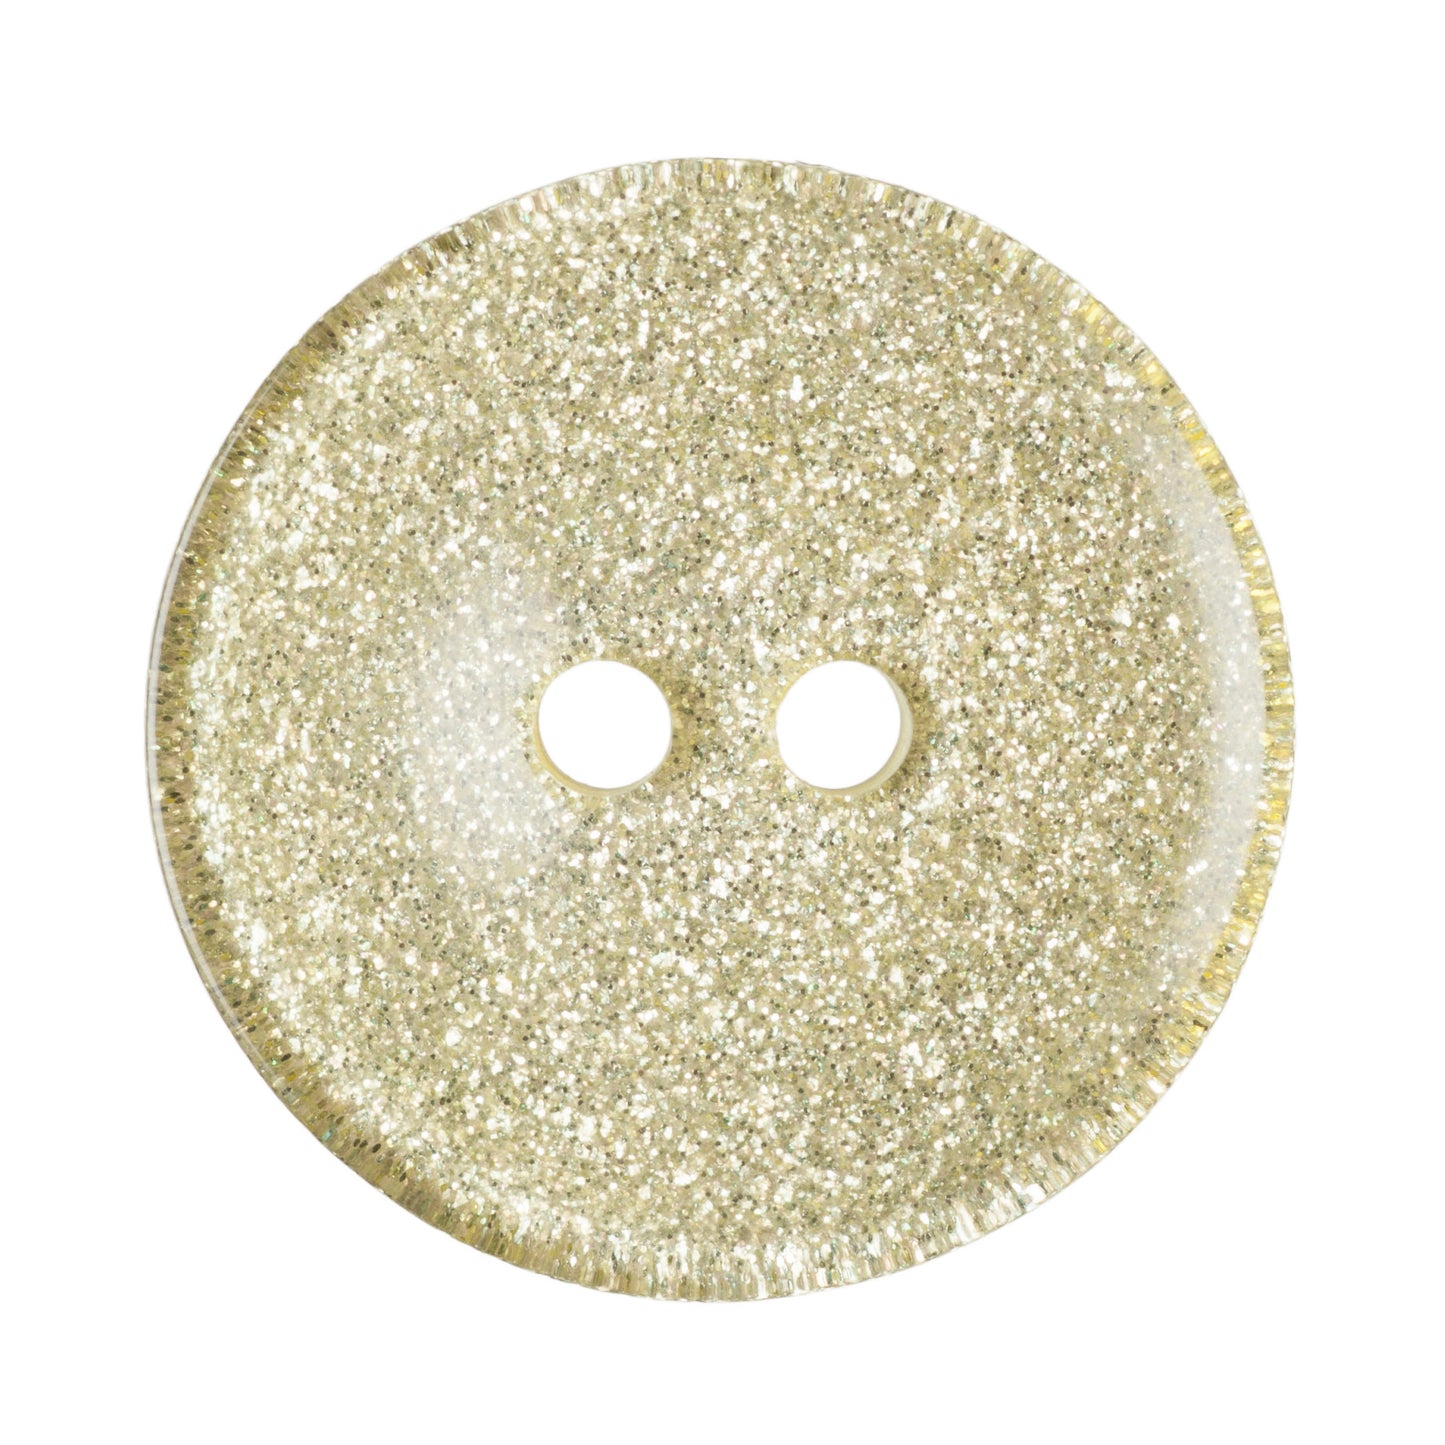 2 Hole Round Glitter Button - 20mm - Light Yellow [LD10.3]